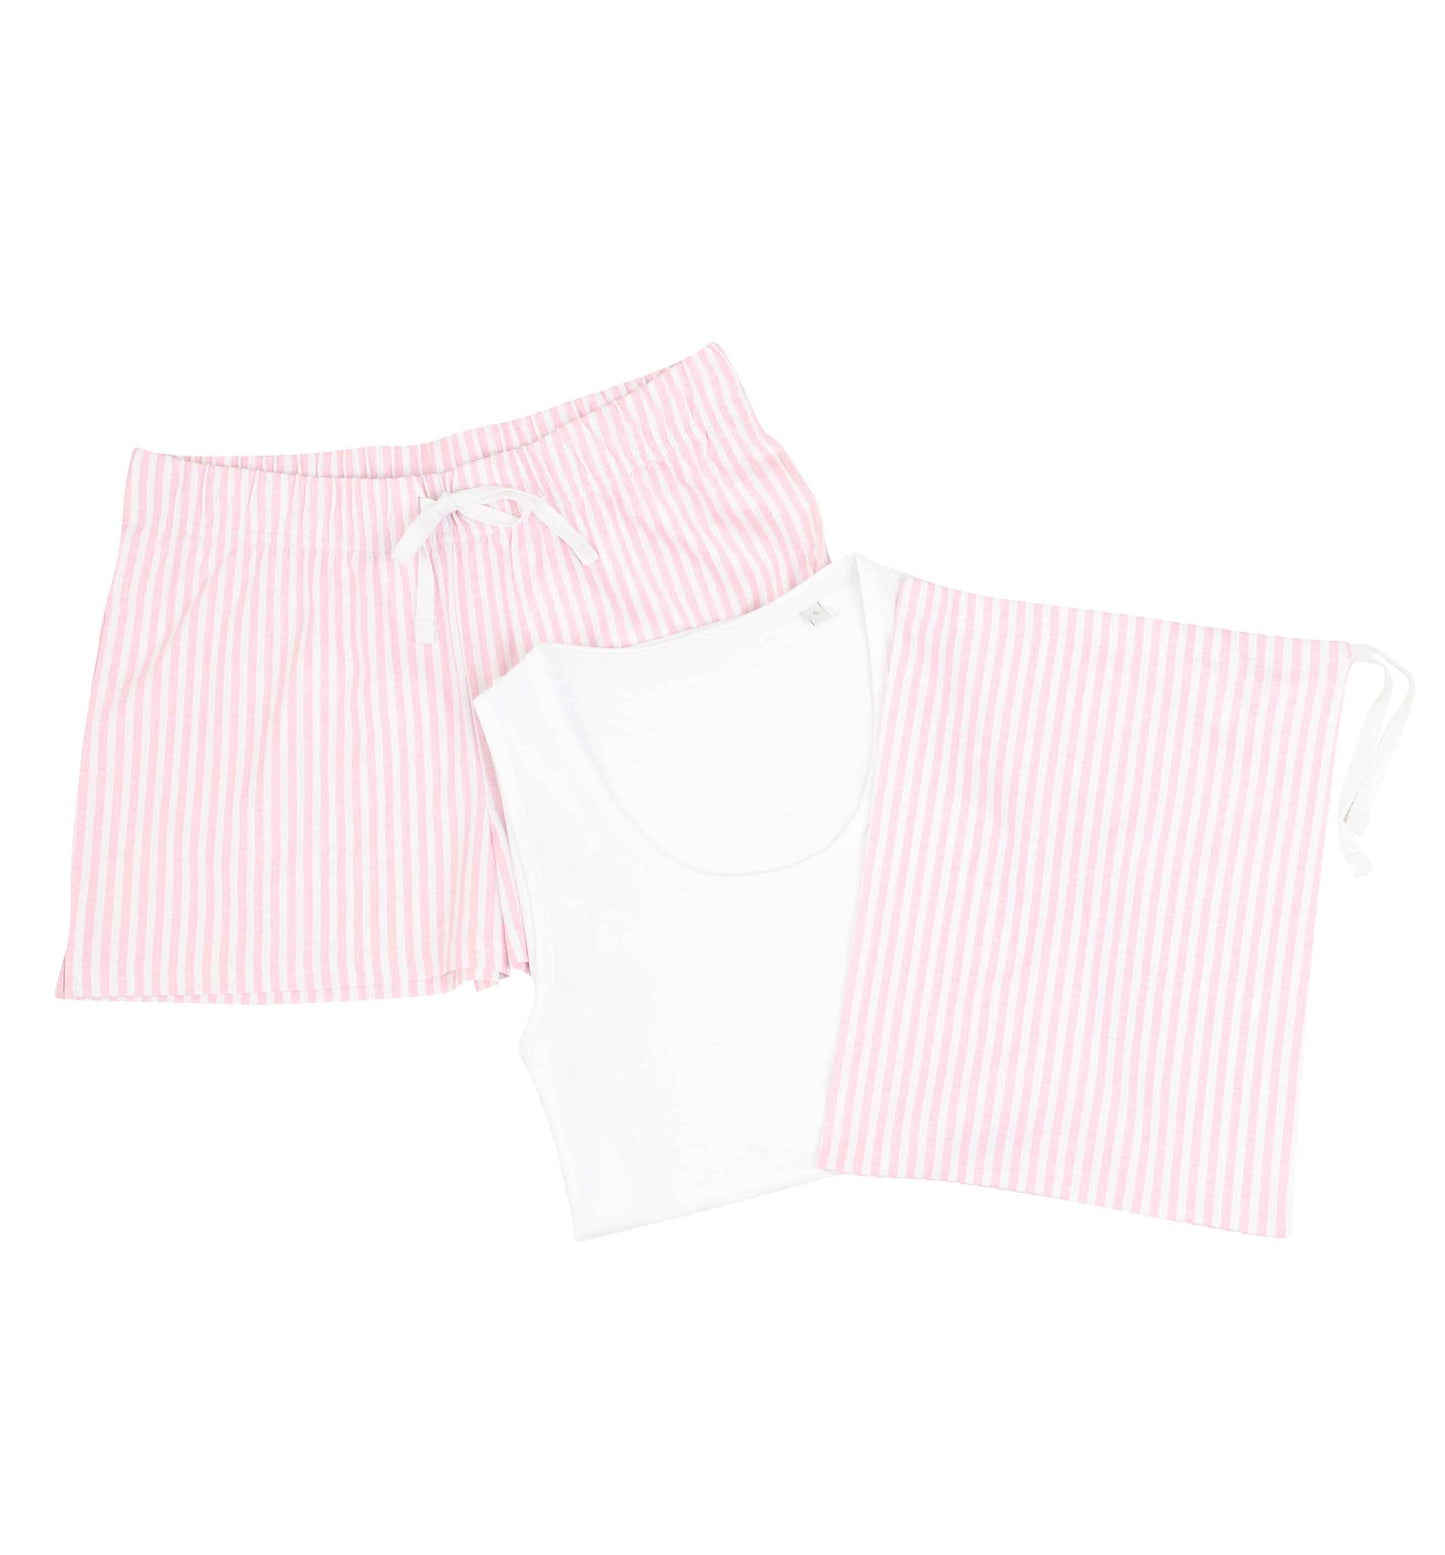 Shredding for the wedding | Pyjama shorts set